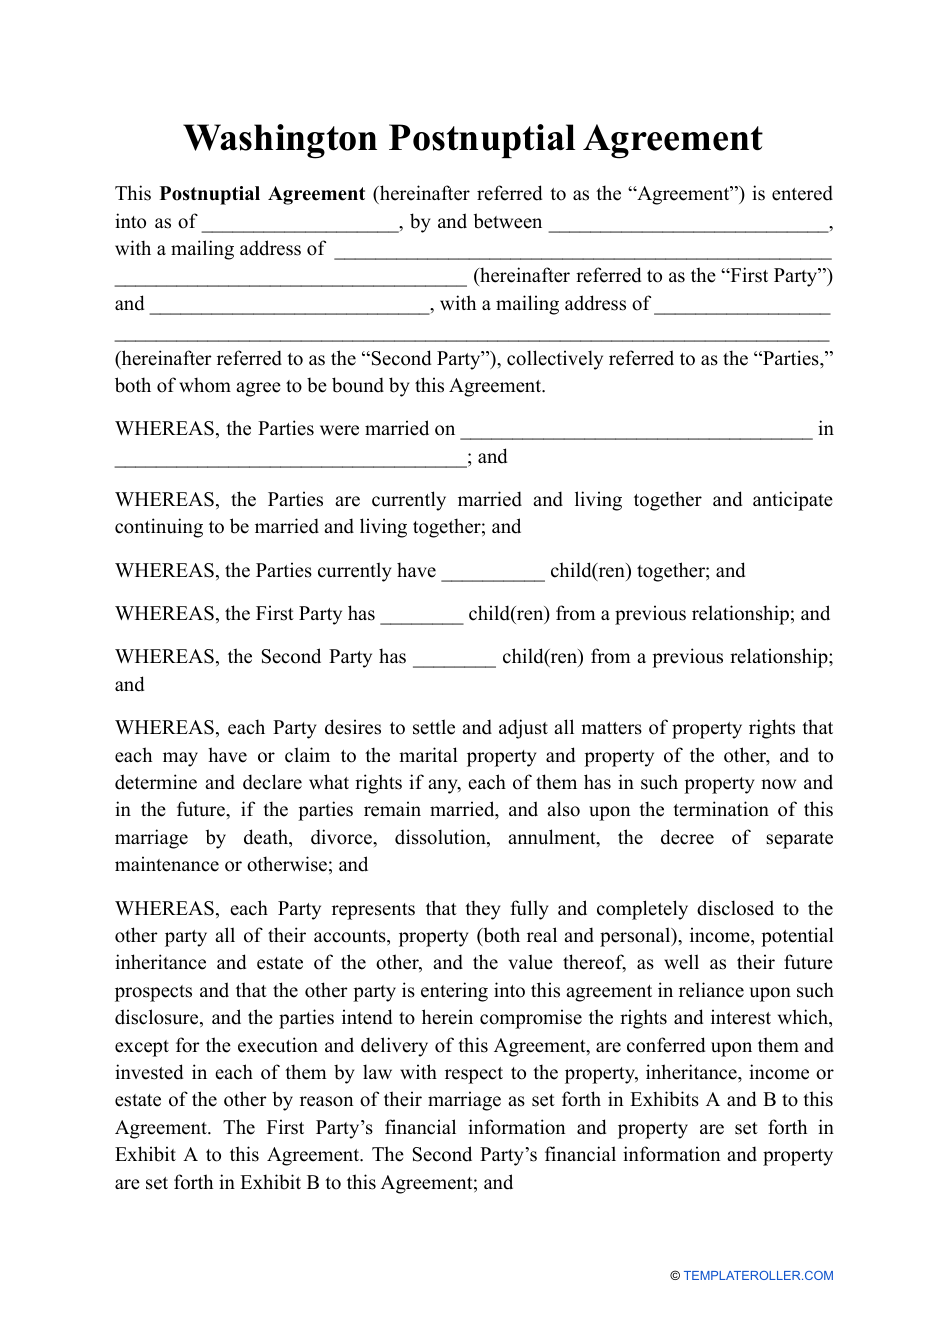 Postnuptial Agreement Template - Washington, Page 1